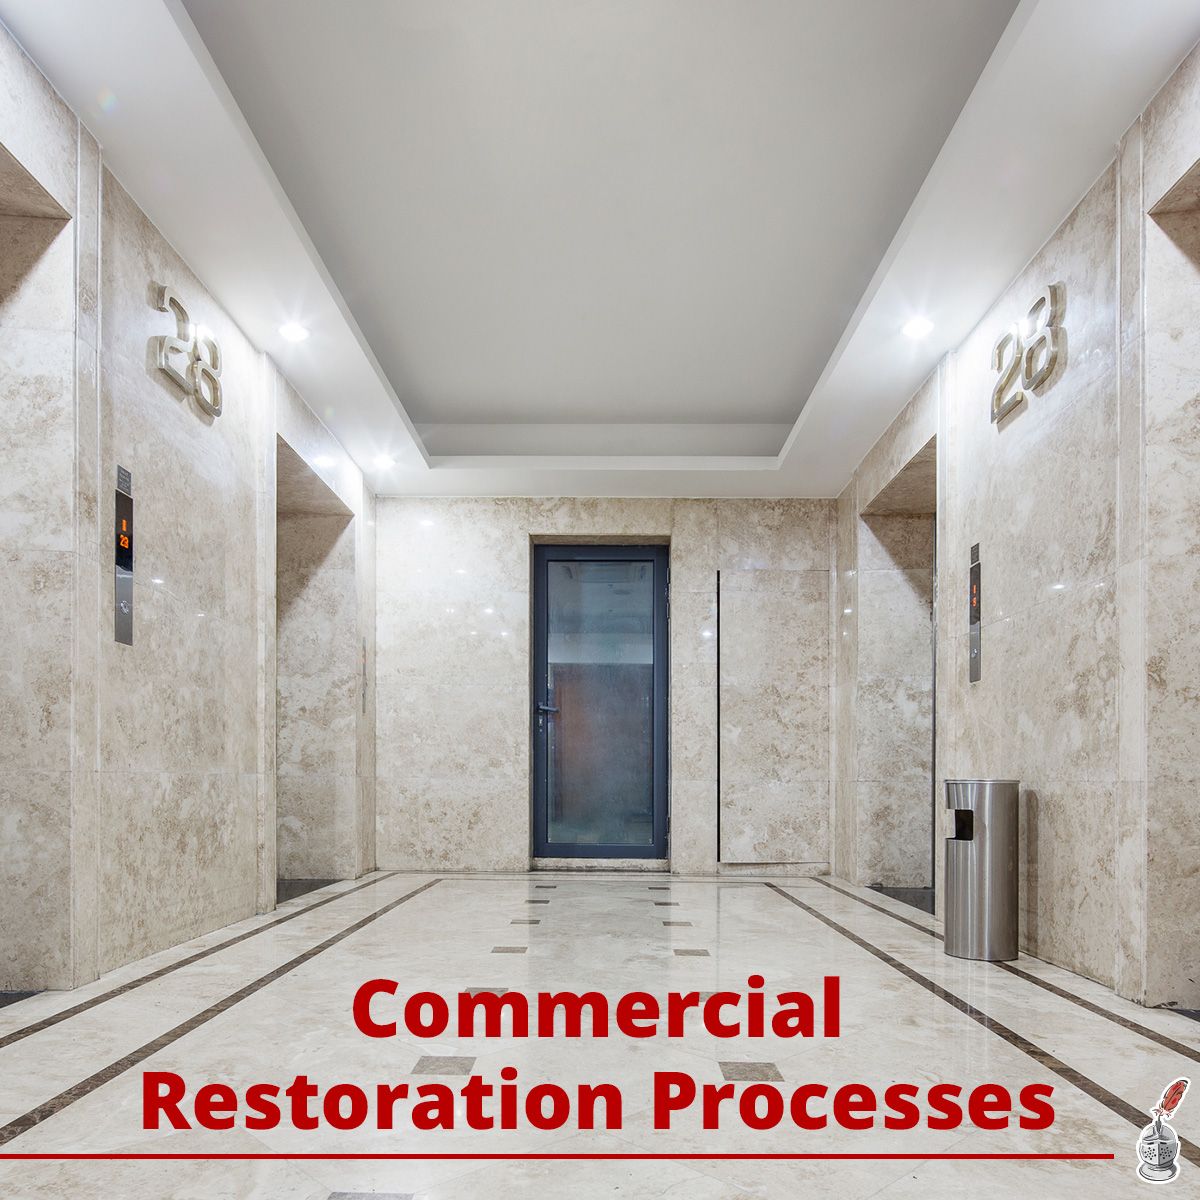 Commercial Restoration Processes